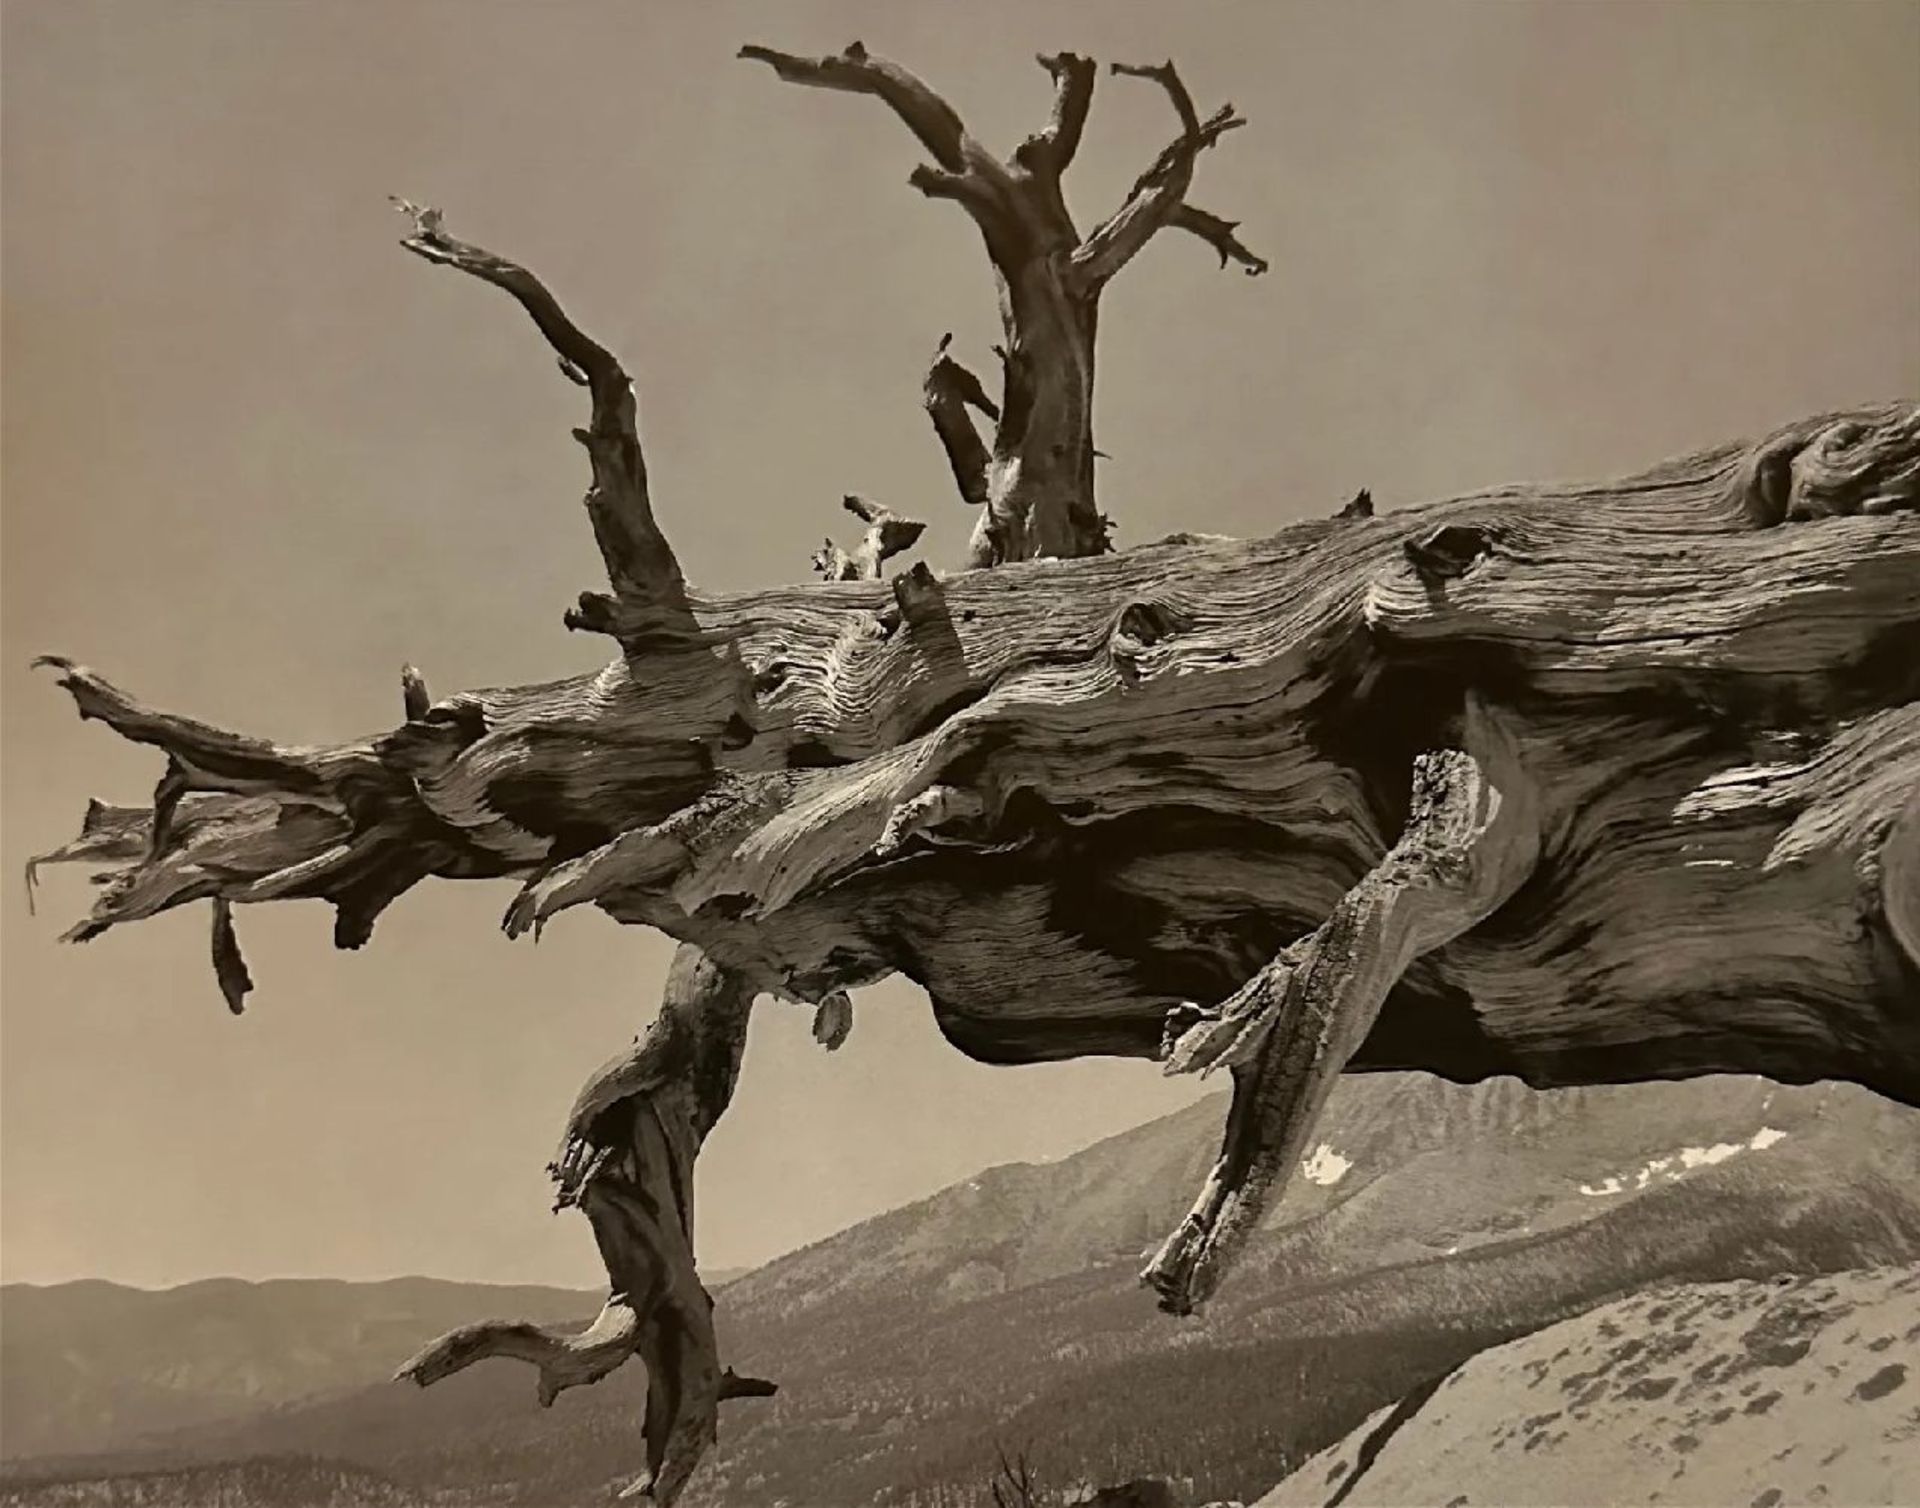 Ansel Adams "Fallen Tree" Print - Image 6 of 6